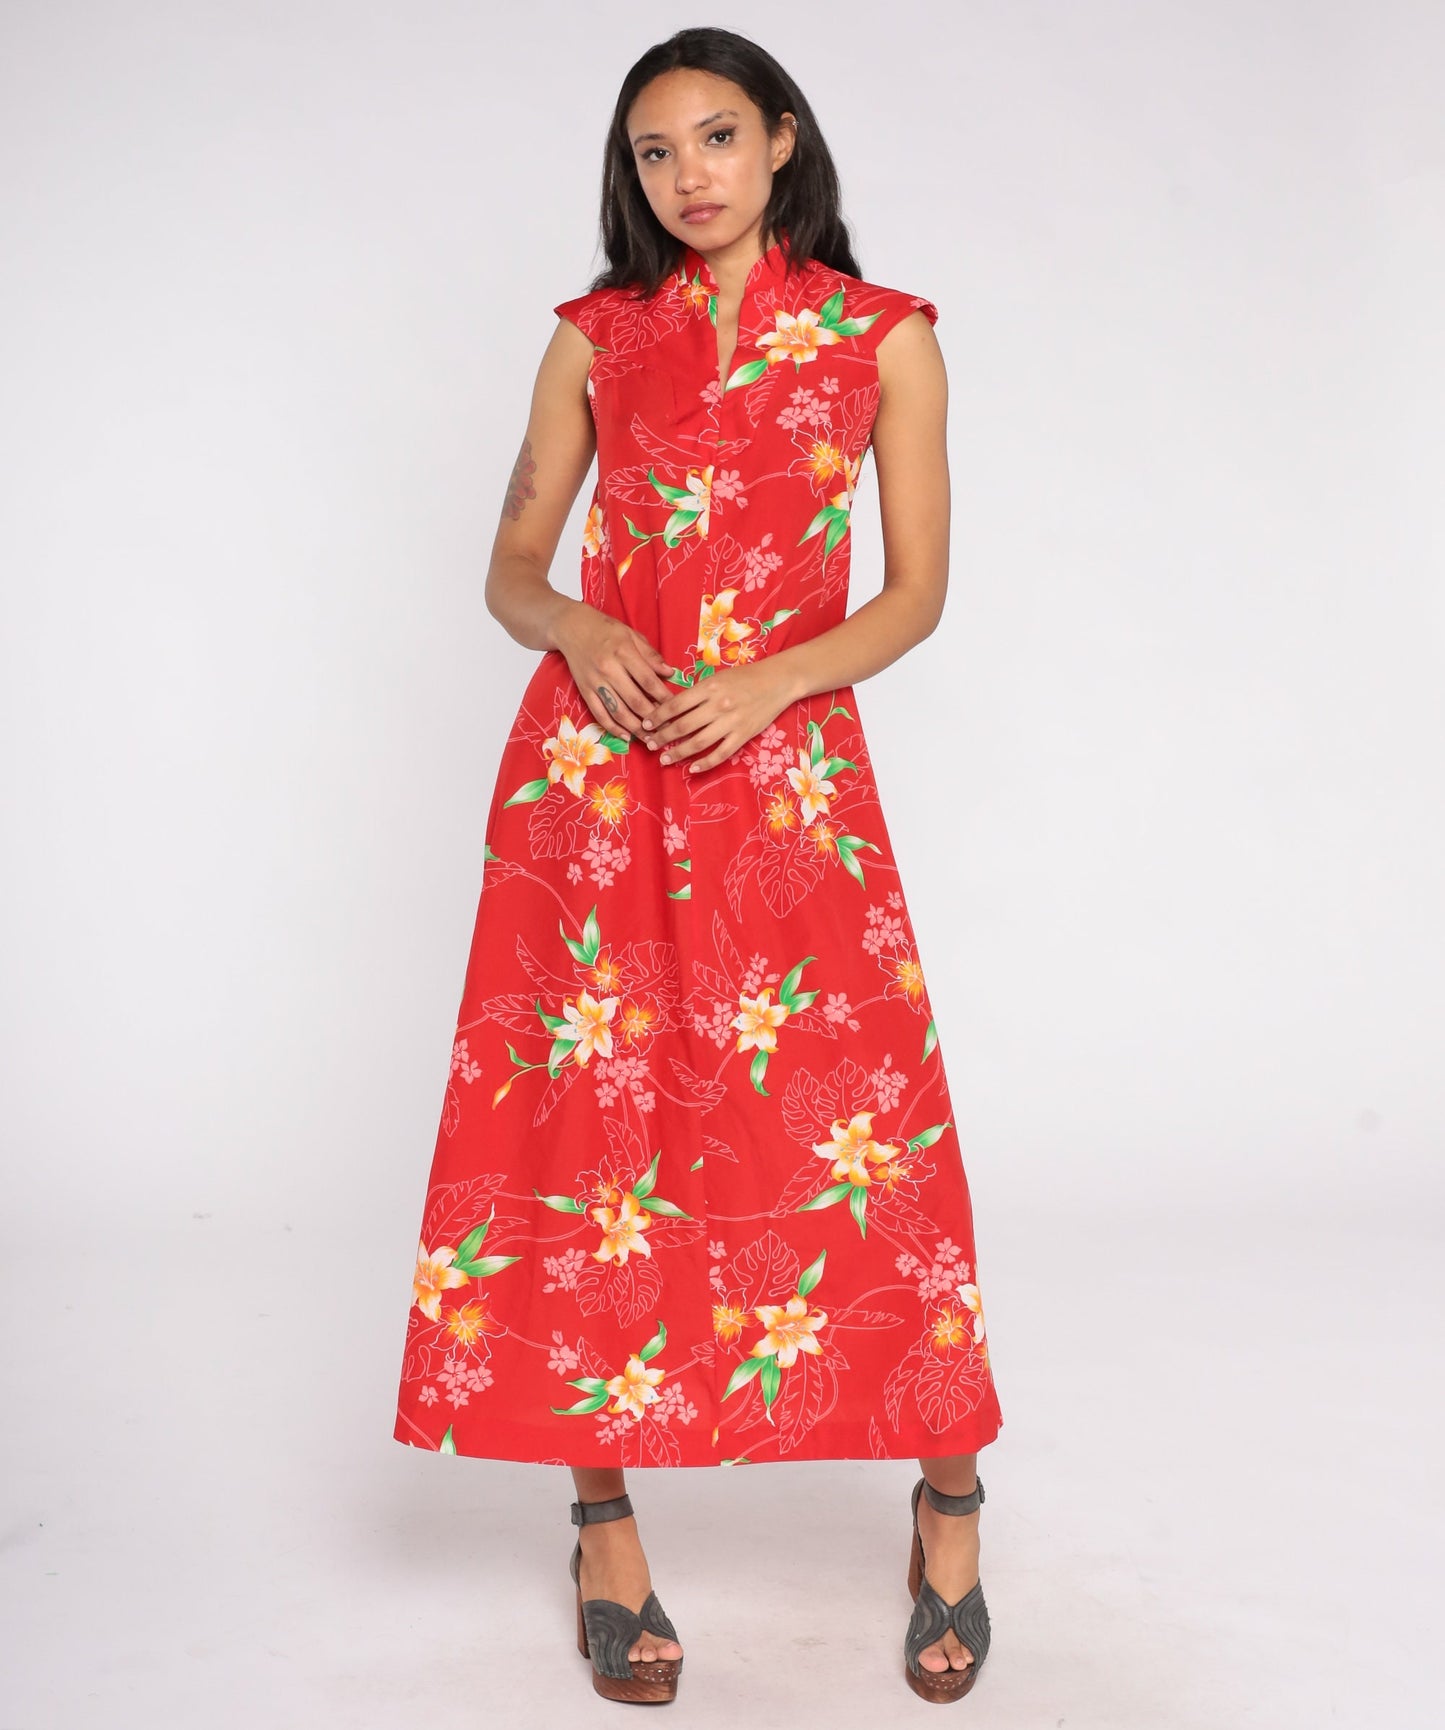 Floral Hawaiian Dress 70s Red Maxi Dress Hippie Tropical Dress 1970s Bohemian Cap Sleeve A-Line Small S